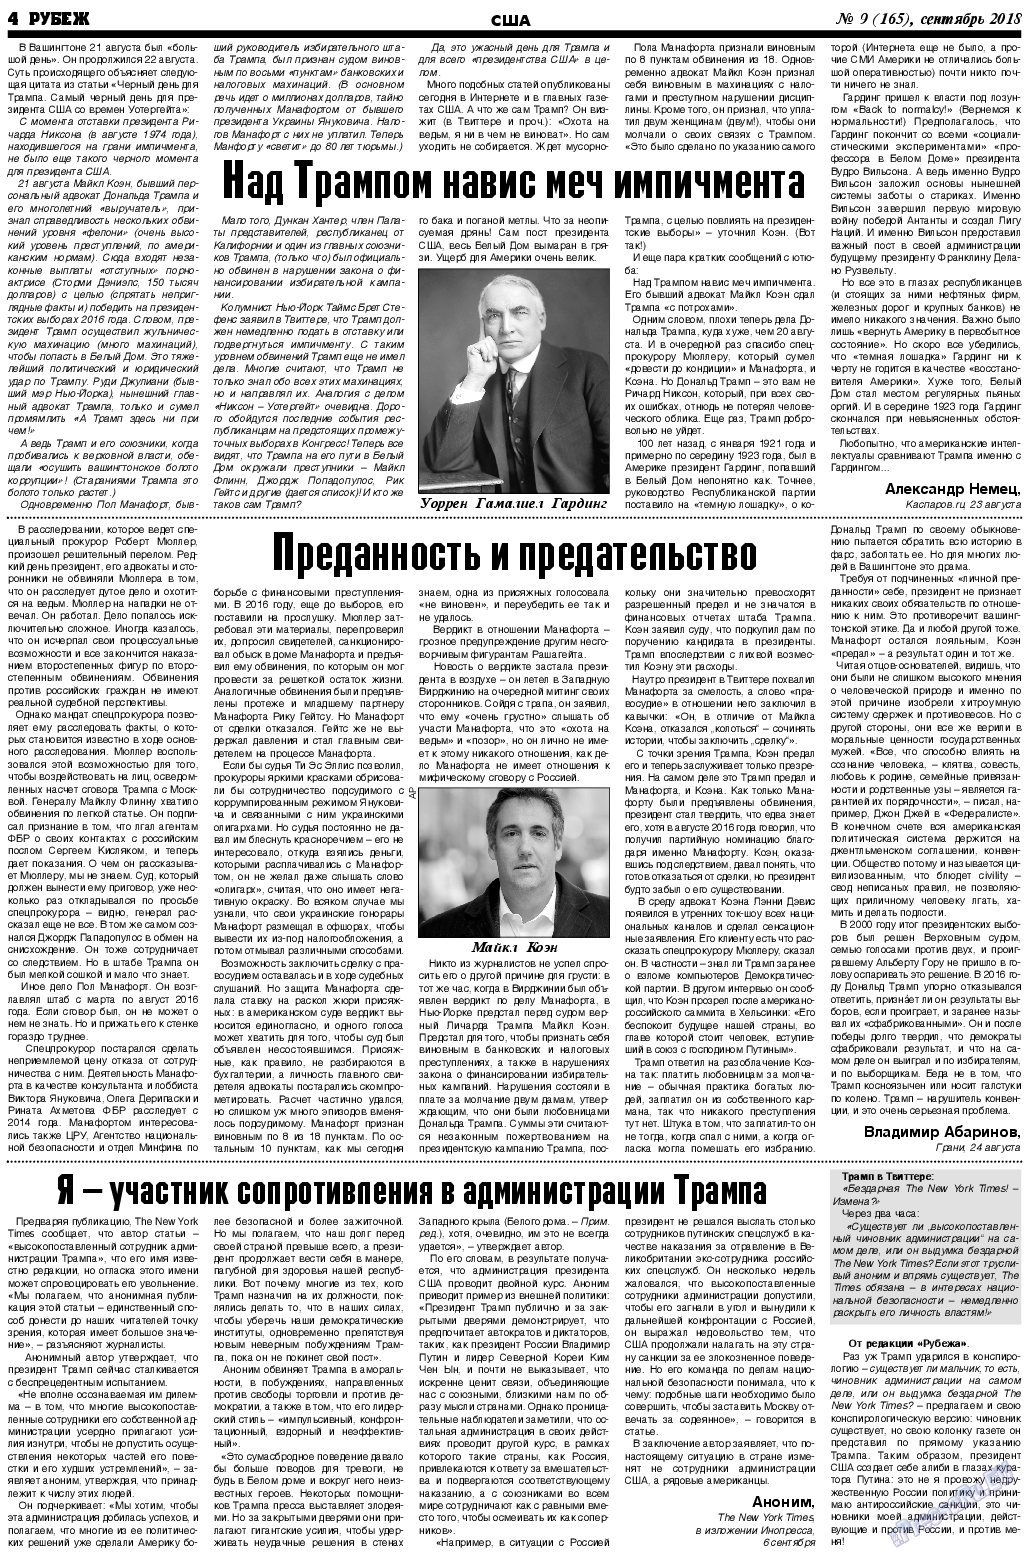 Рубеж, газета. 2018 №9 стр.4